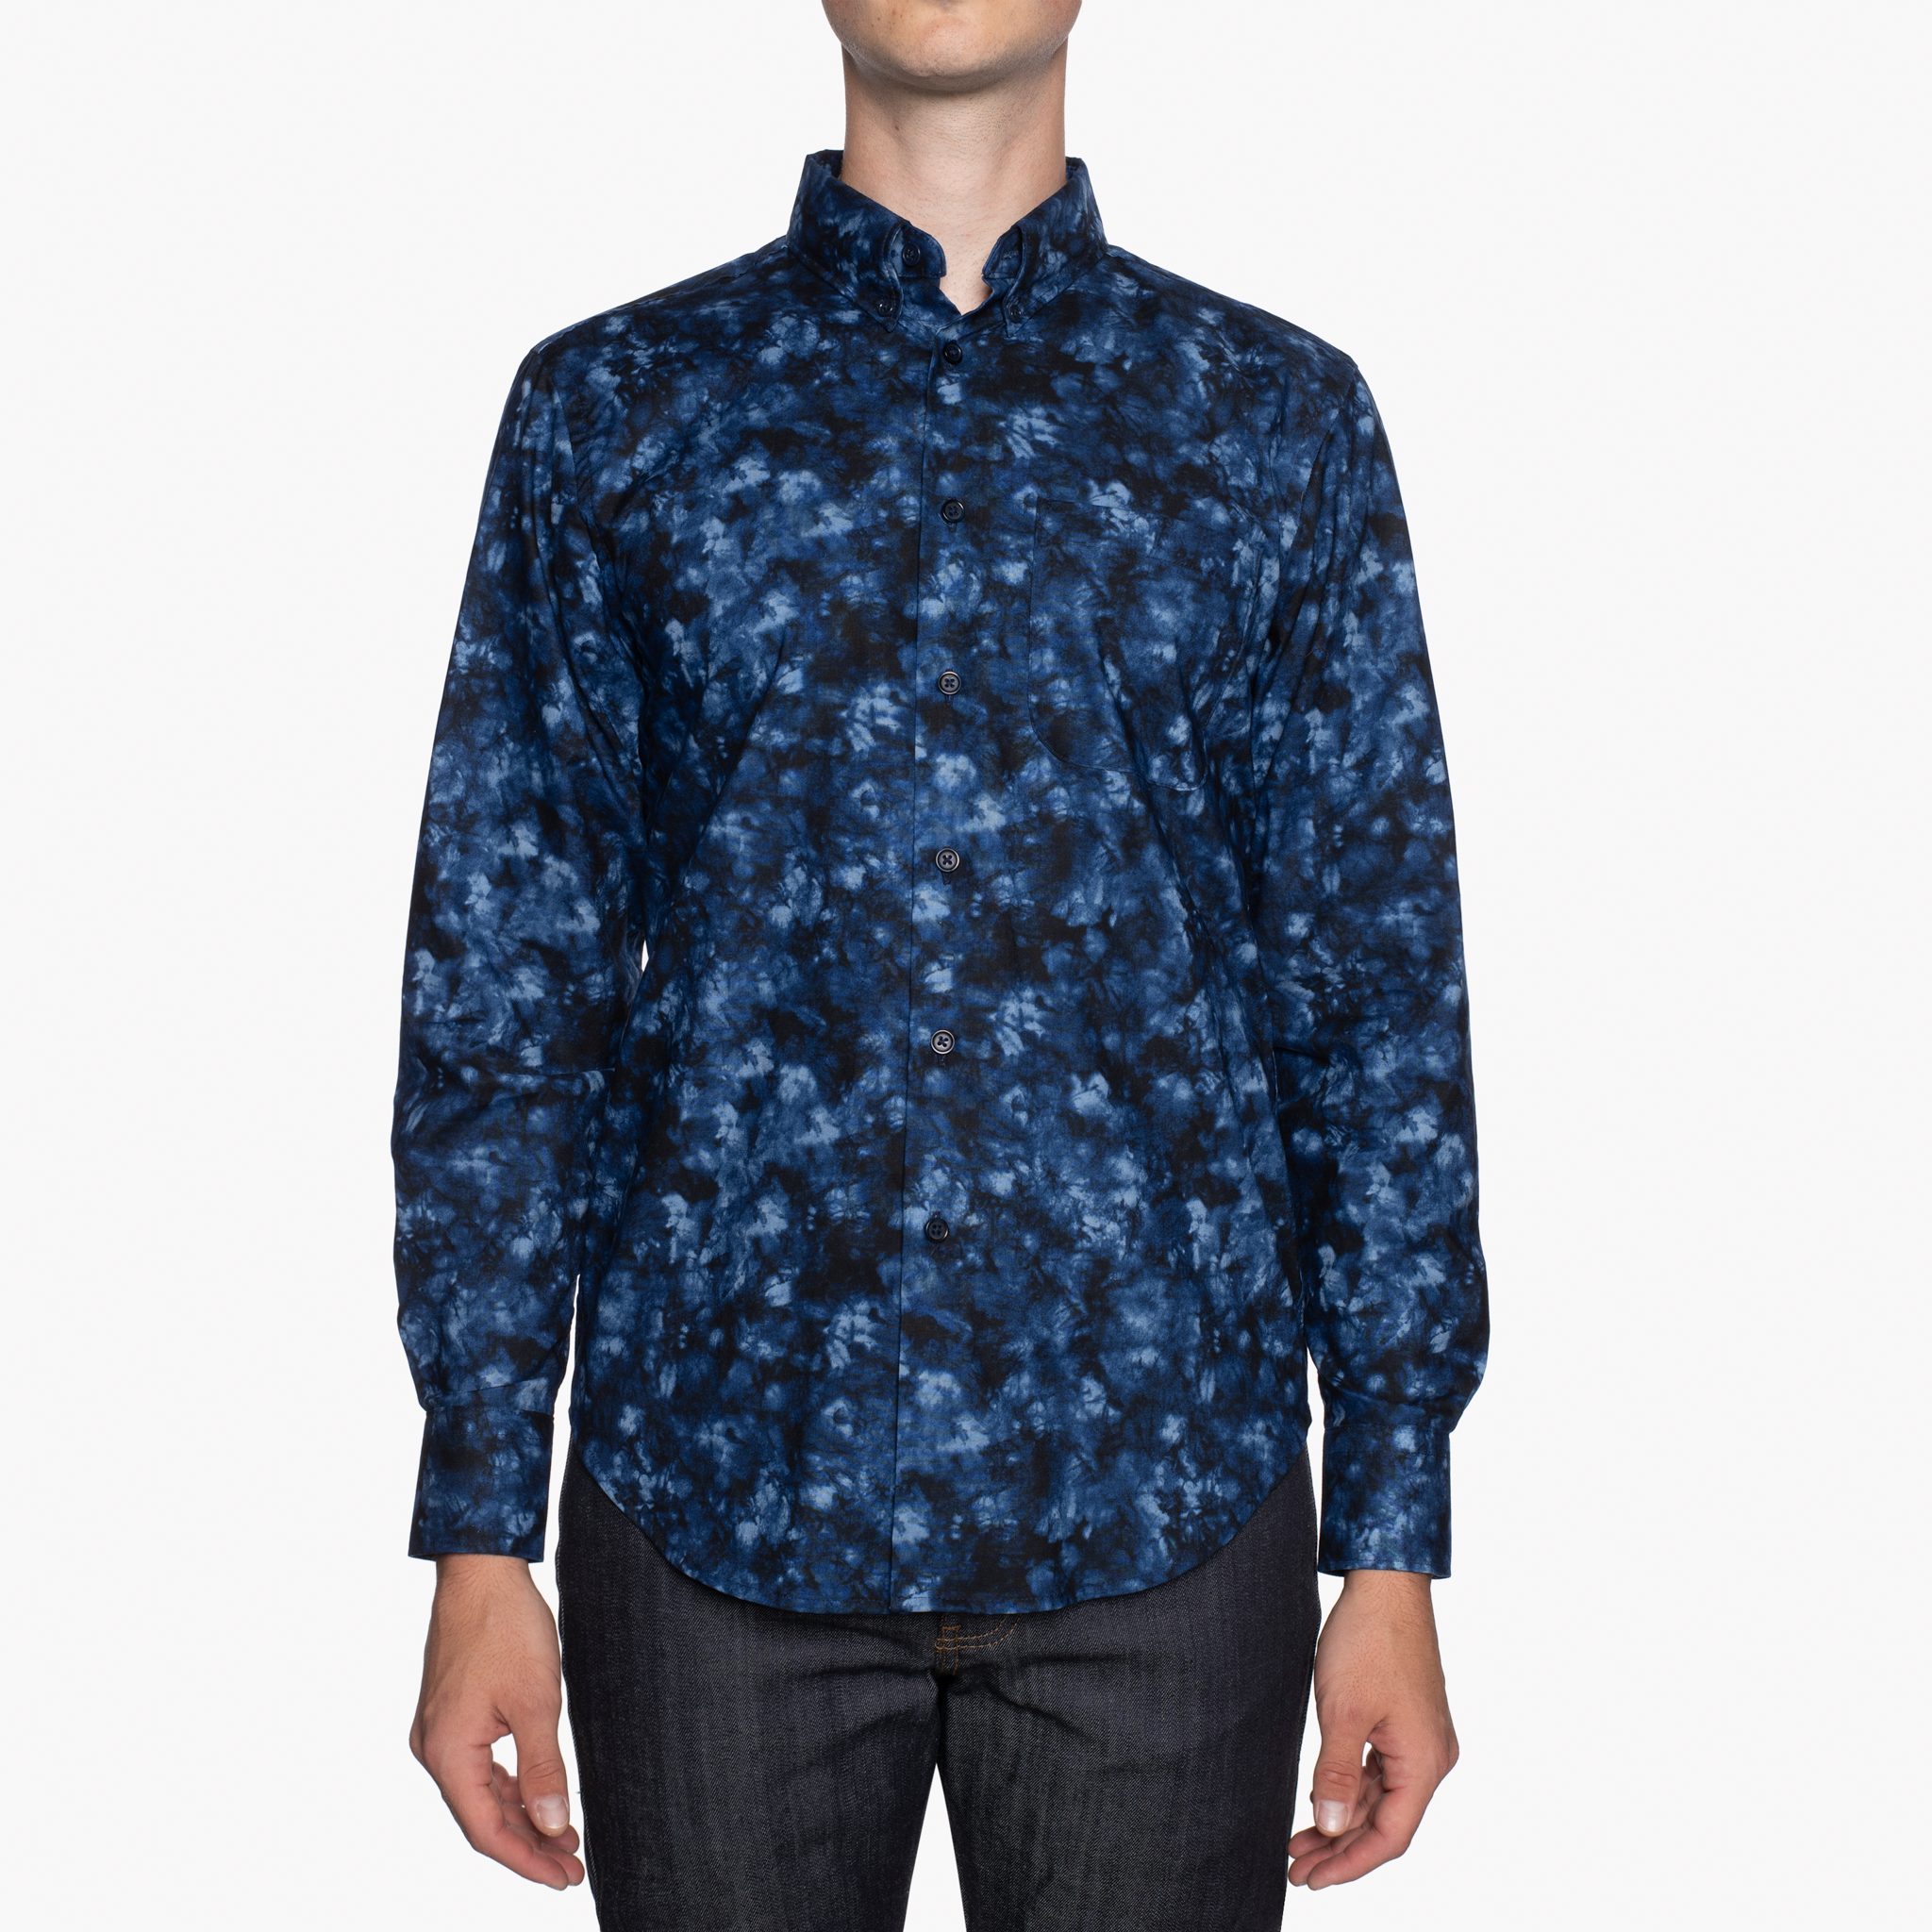  Easy Shirt - Tie Dye Print - Dark Blue - front 